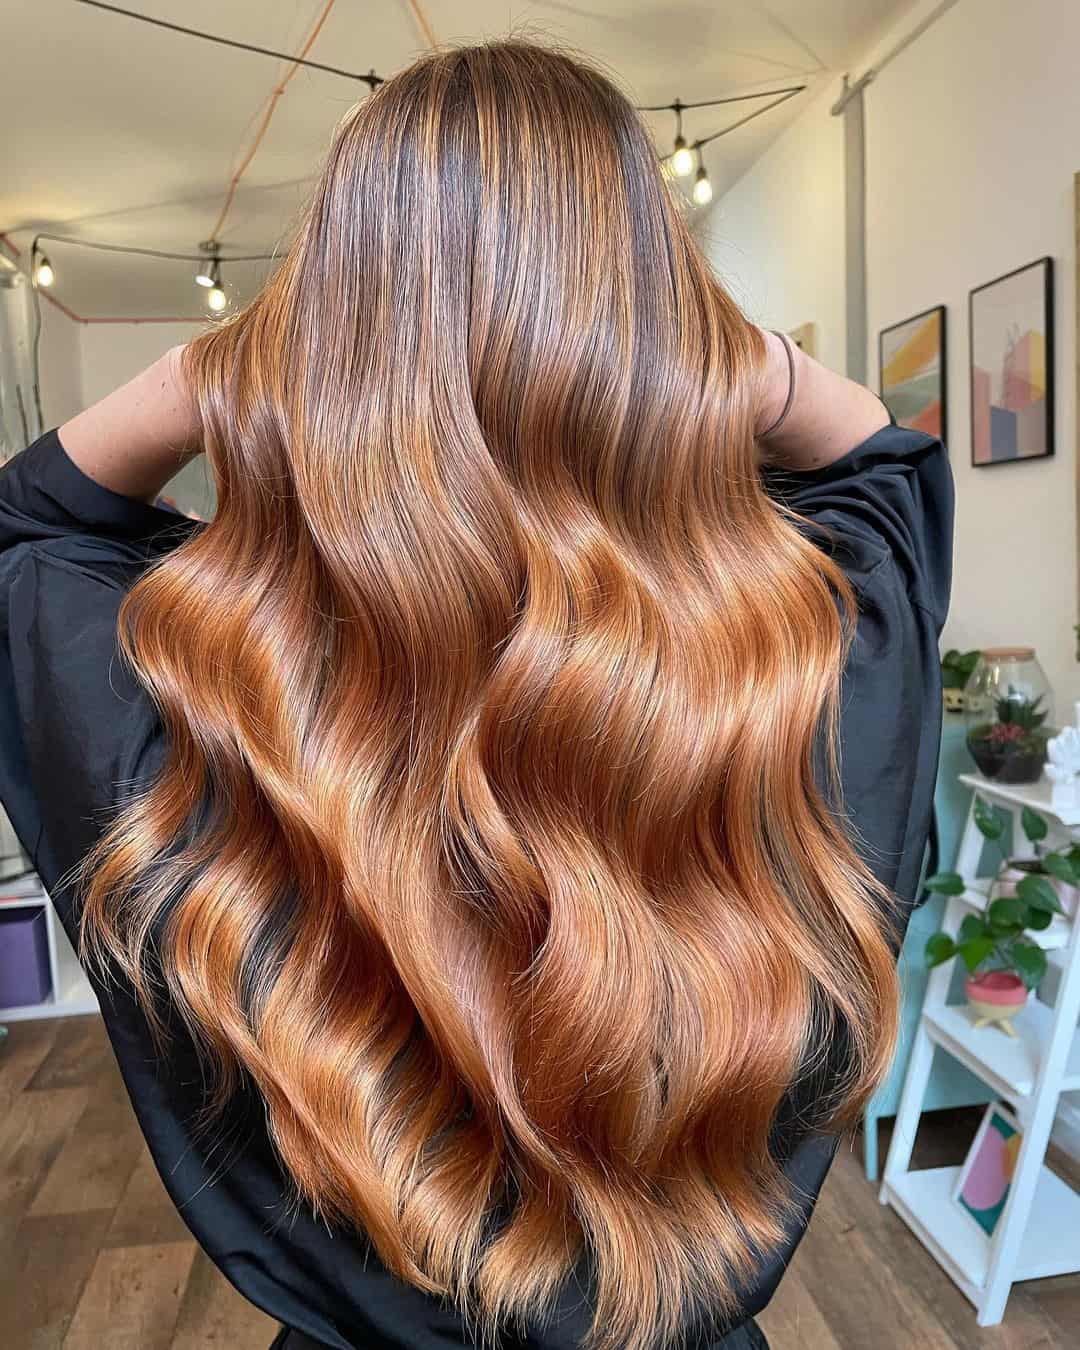 Shiny & Long Light Copper Highlights On Brown Hair